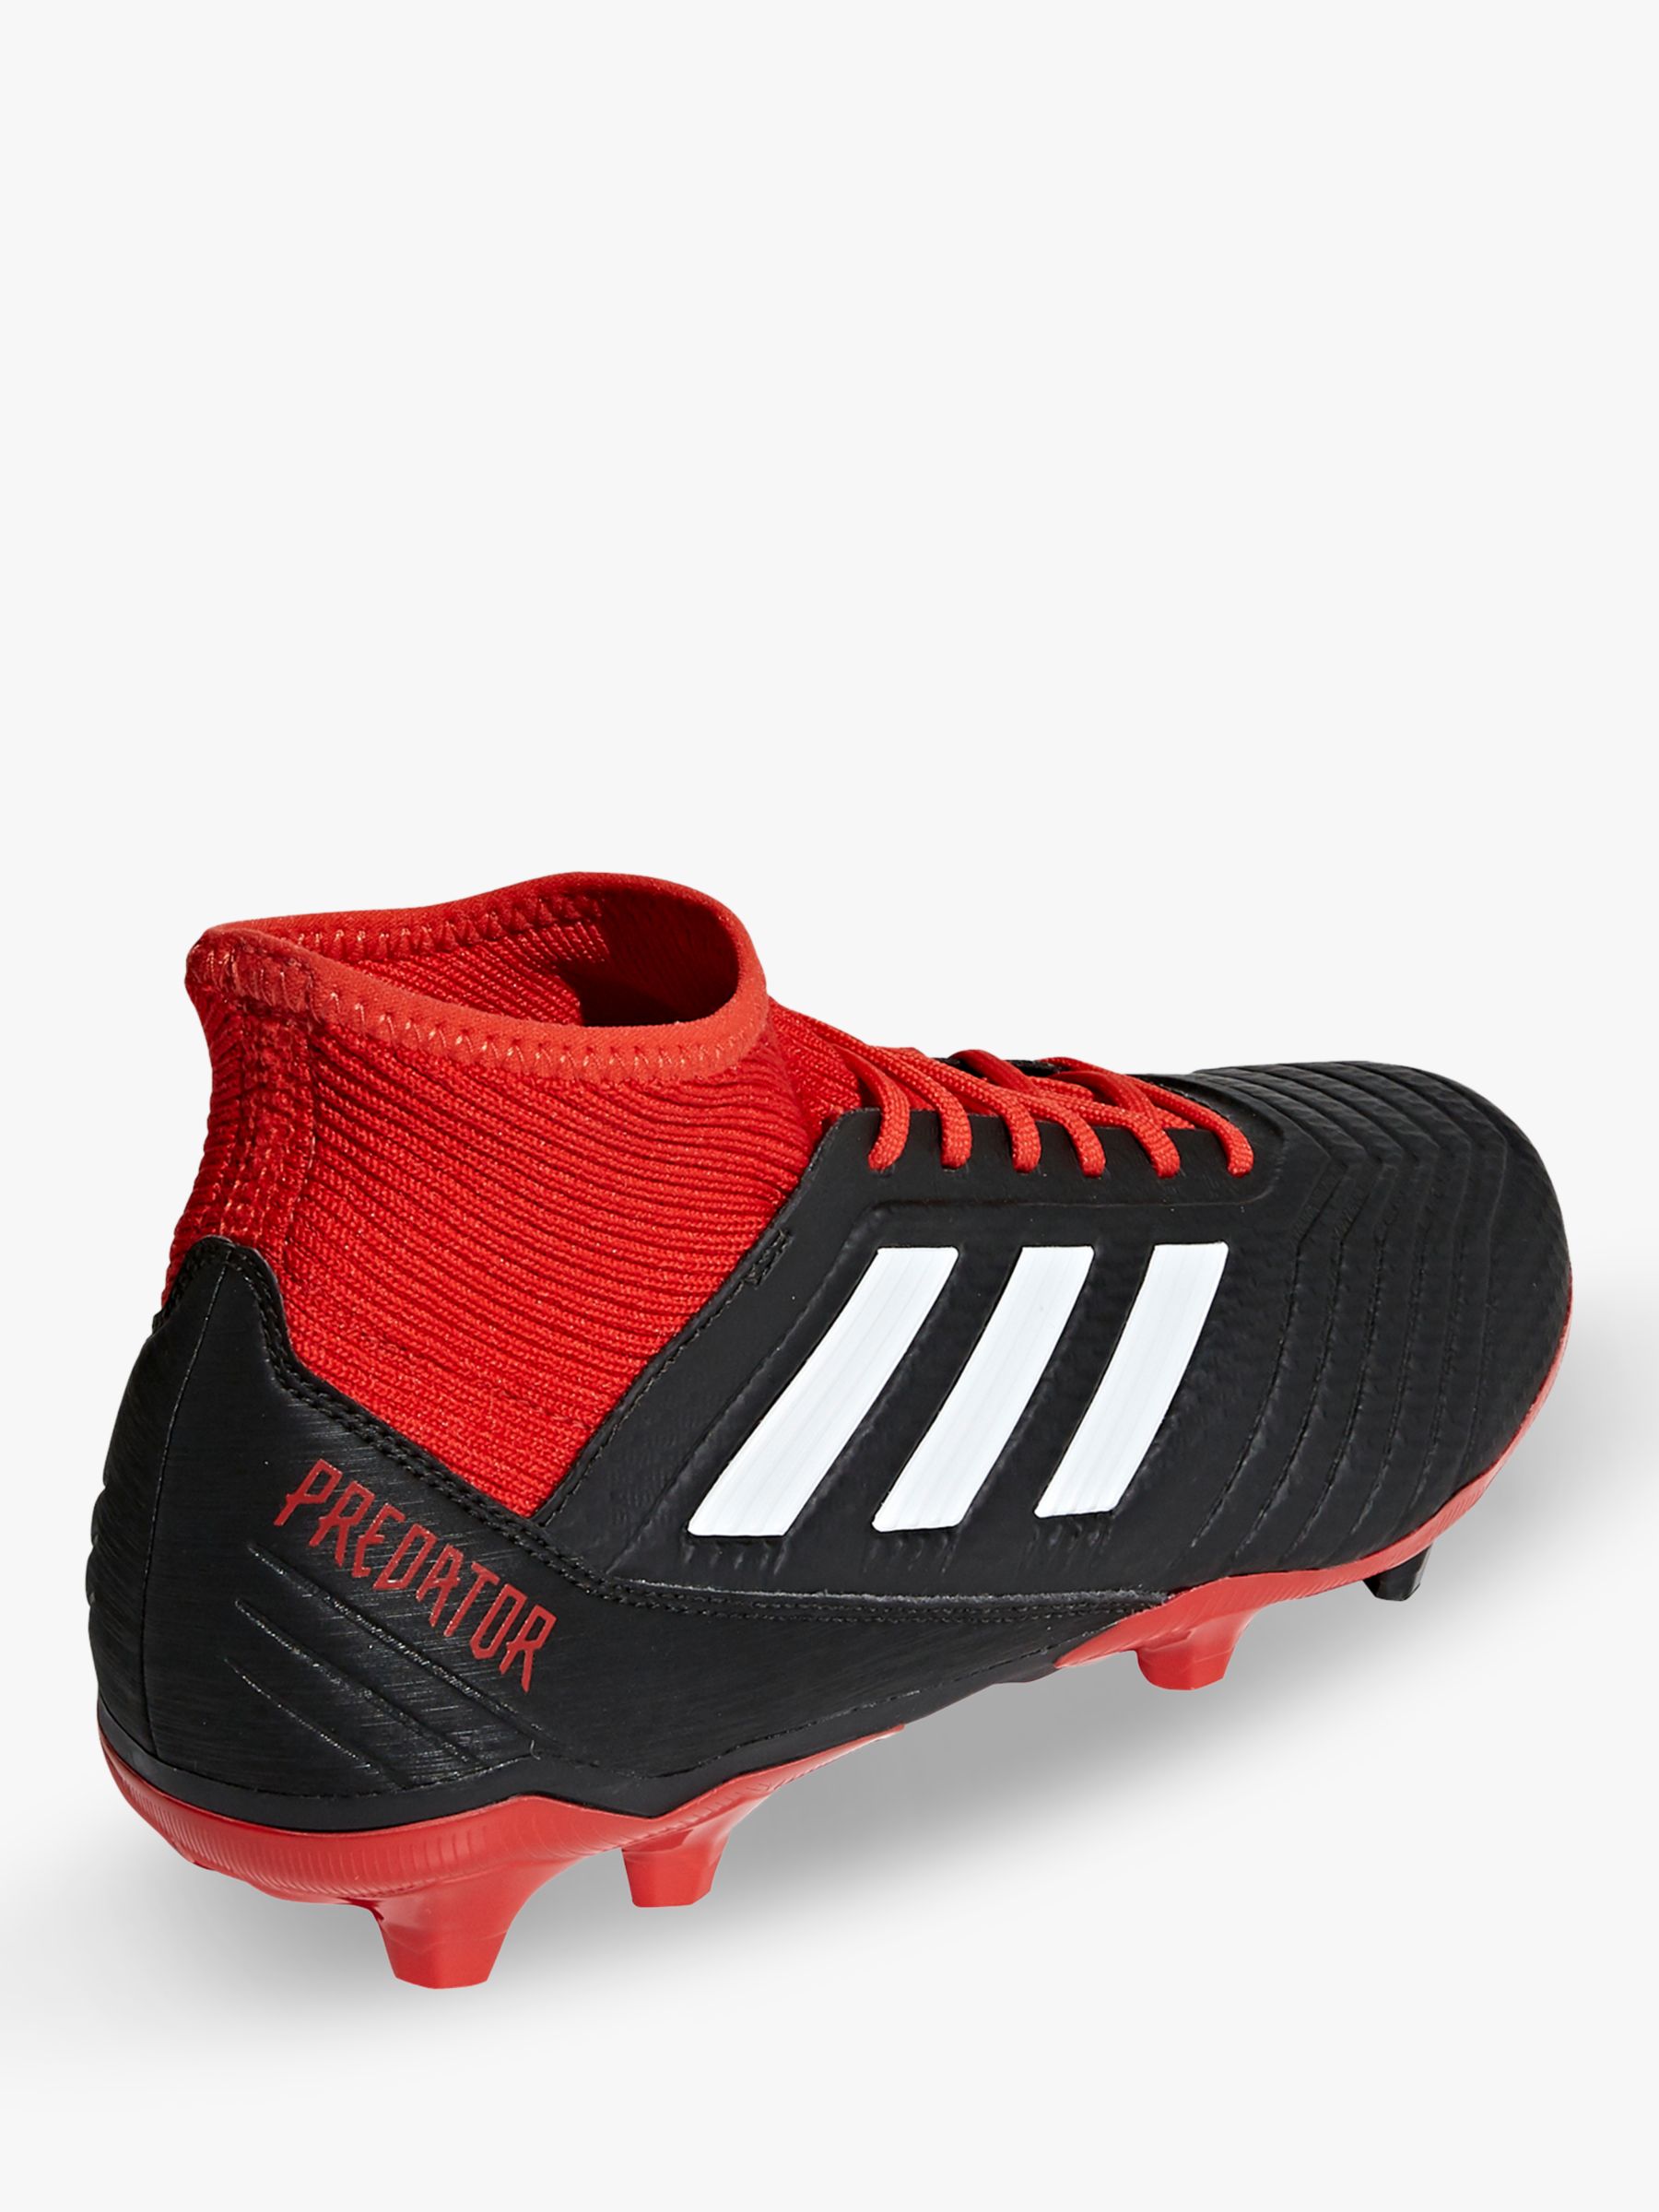 Adidas Predator 18 3 Men S Football Boots Core Black Red At John